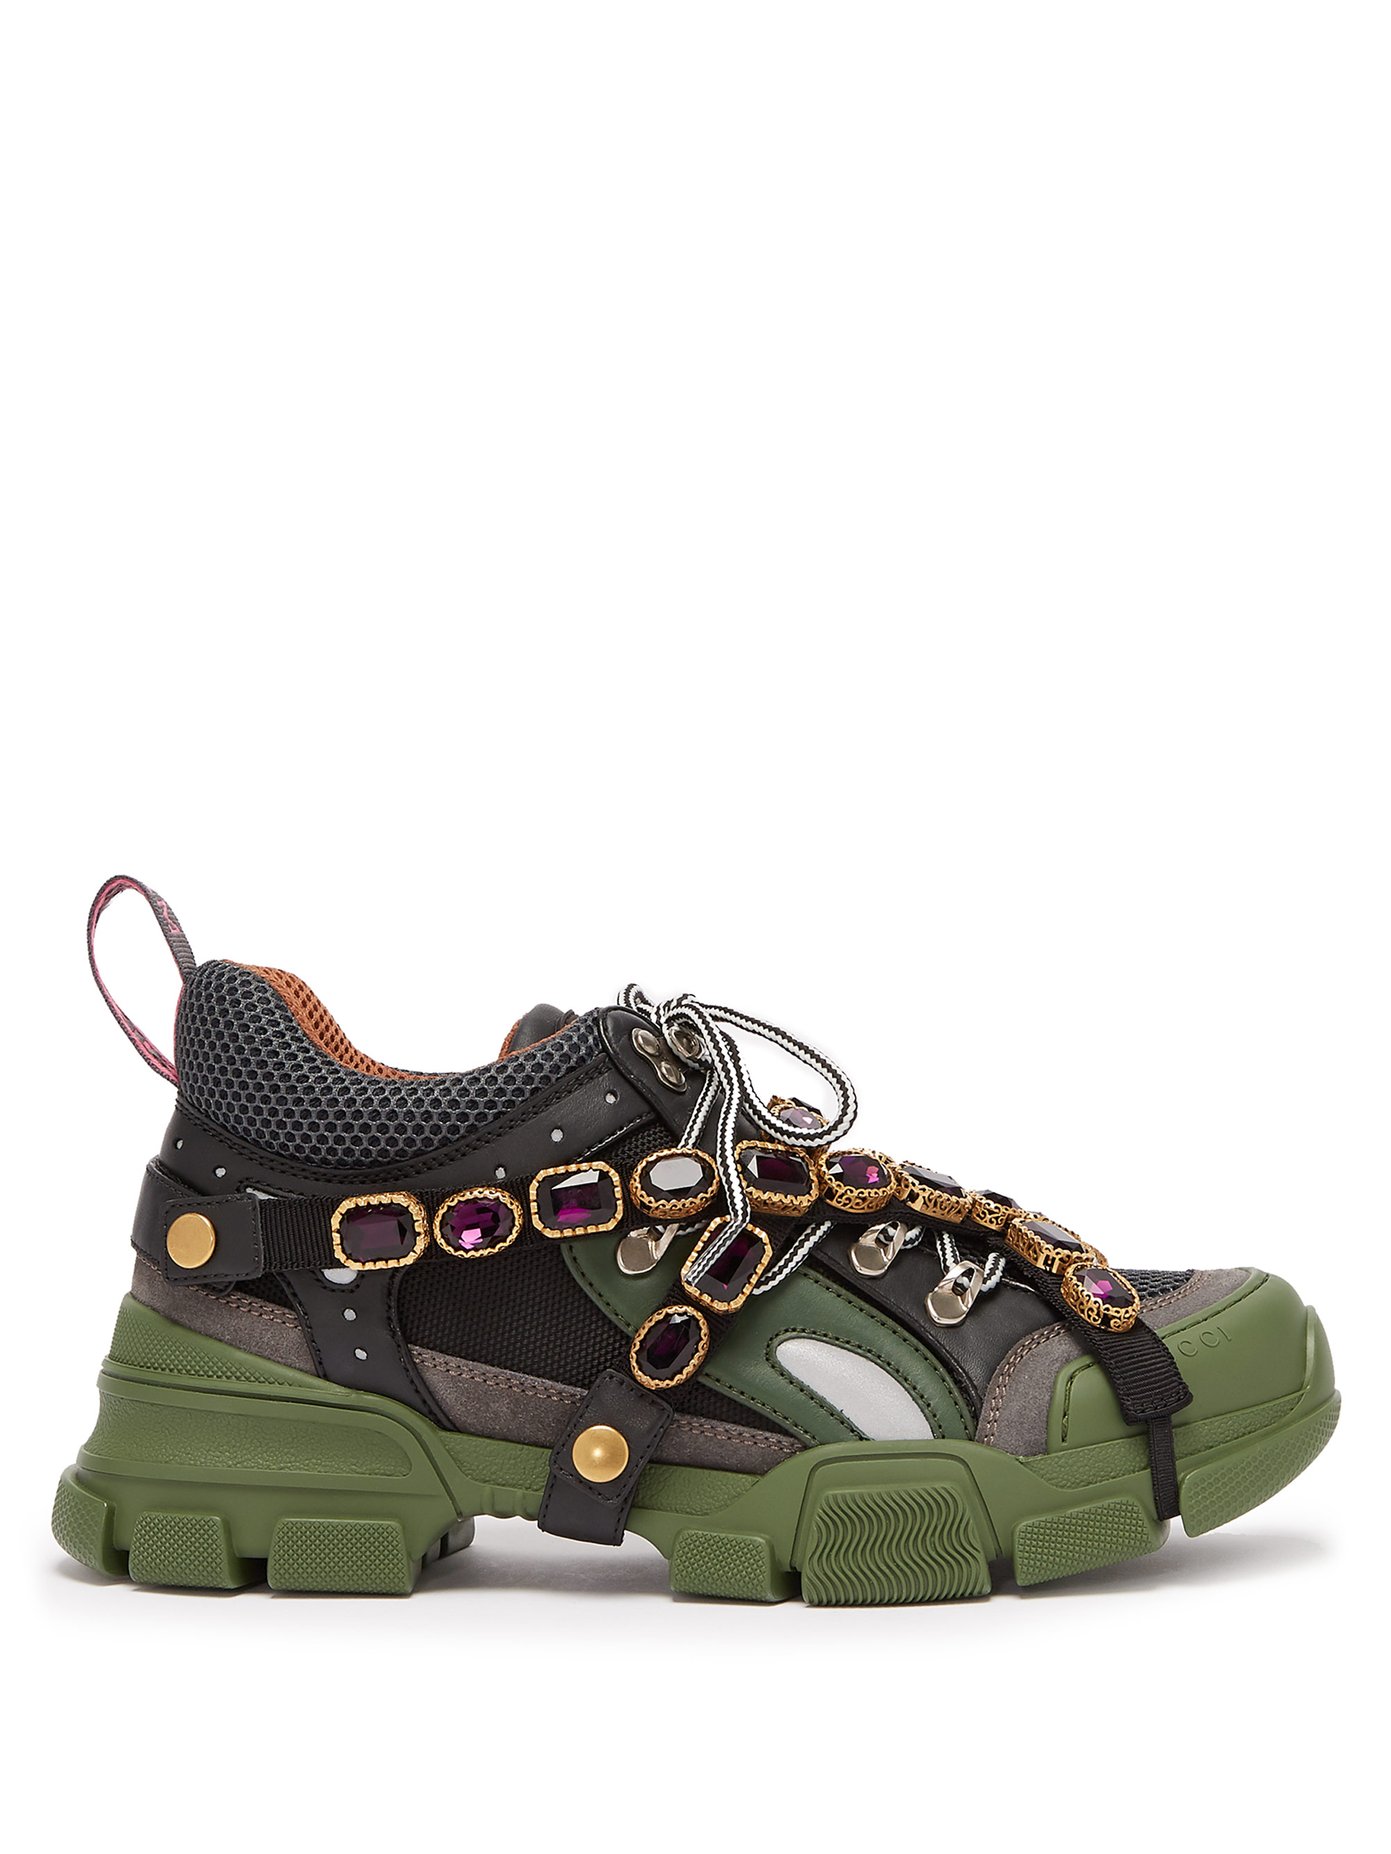 gucci flashtrek embellished sneakers